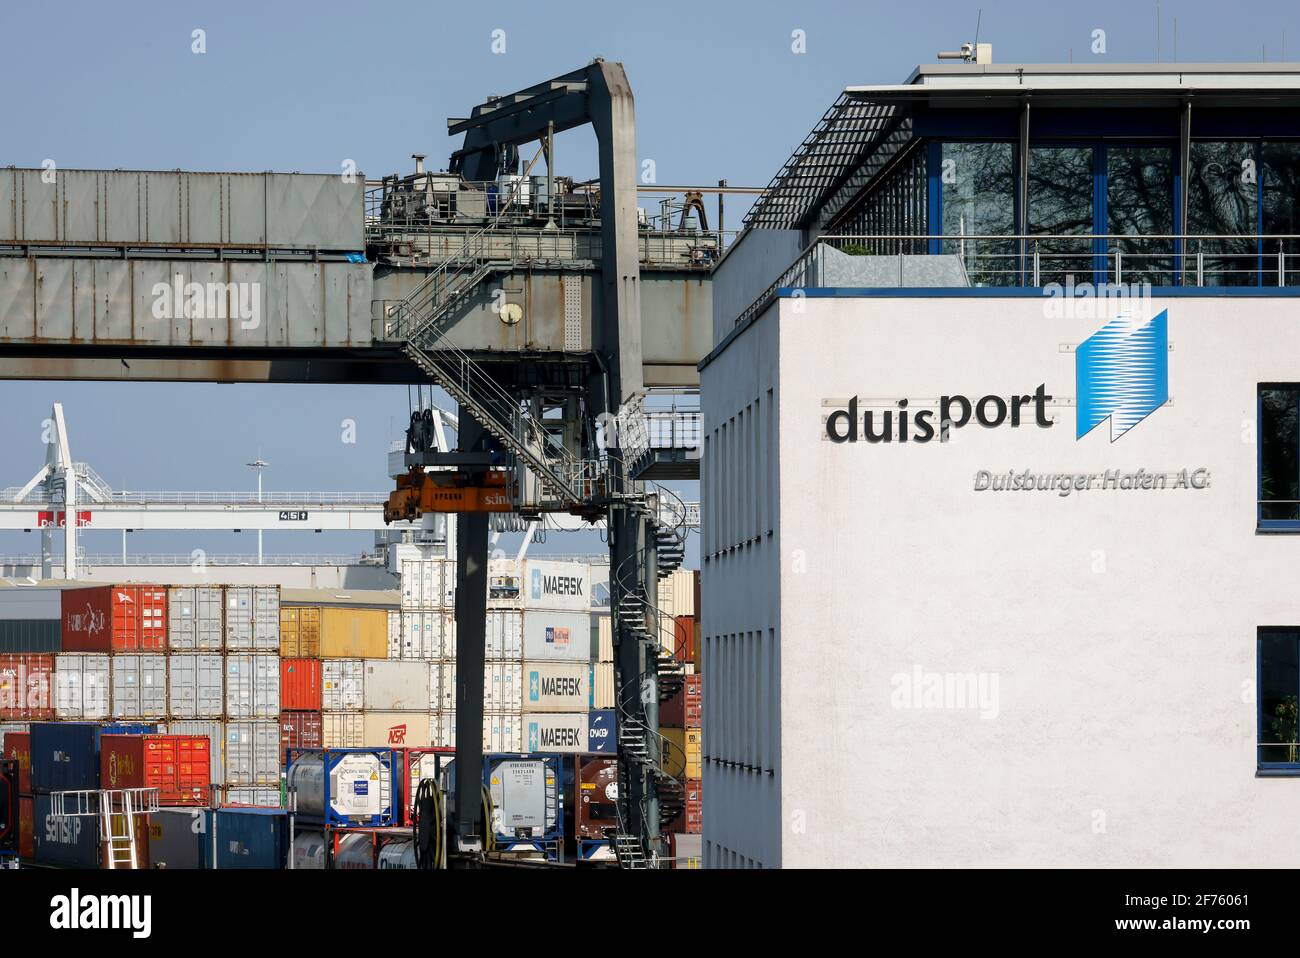 Duisburg, zona de Ruhr, Renania del Norte-Westfalia, Alemania - Duisburger Hafen AG, Duisport, sede de la empresa en la terminal de contenedores en Duisburg R. Foto de stock